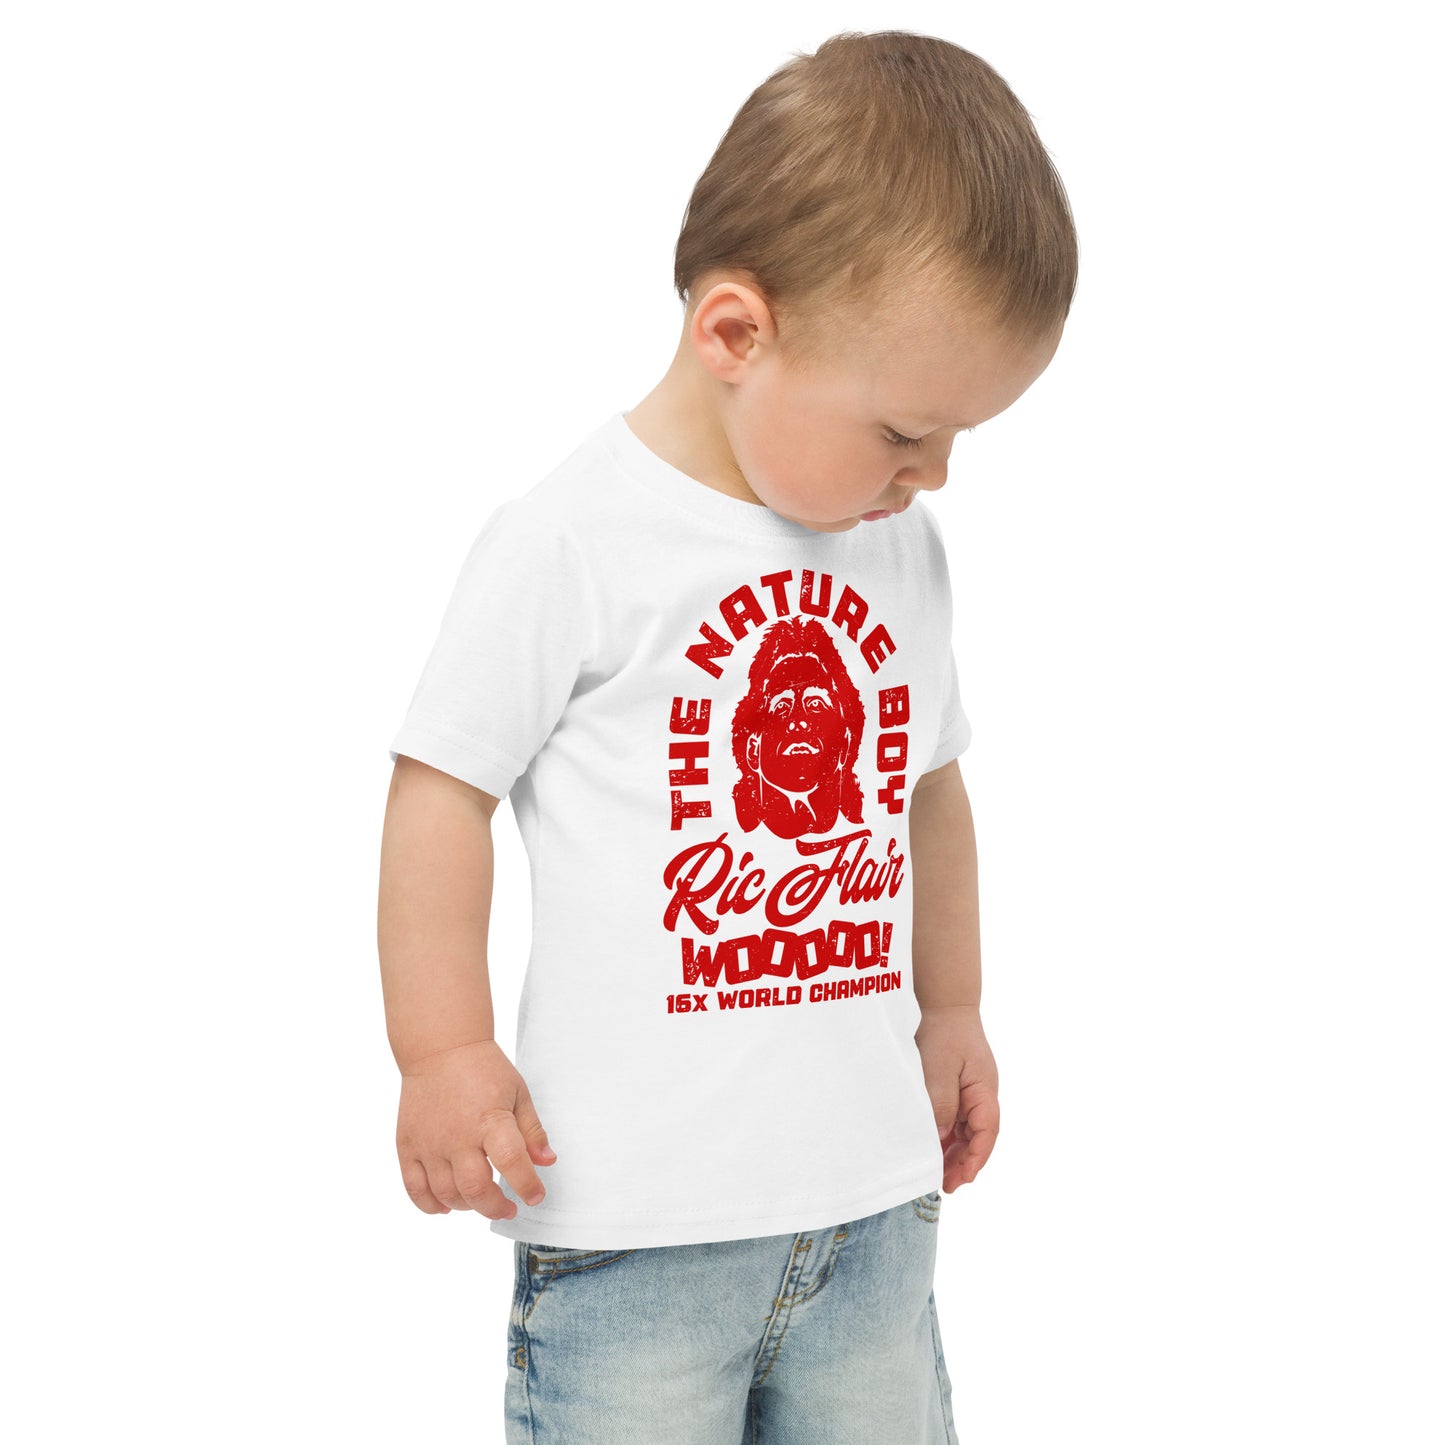 The Nature Boy Toddler jersey t-shirt